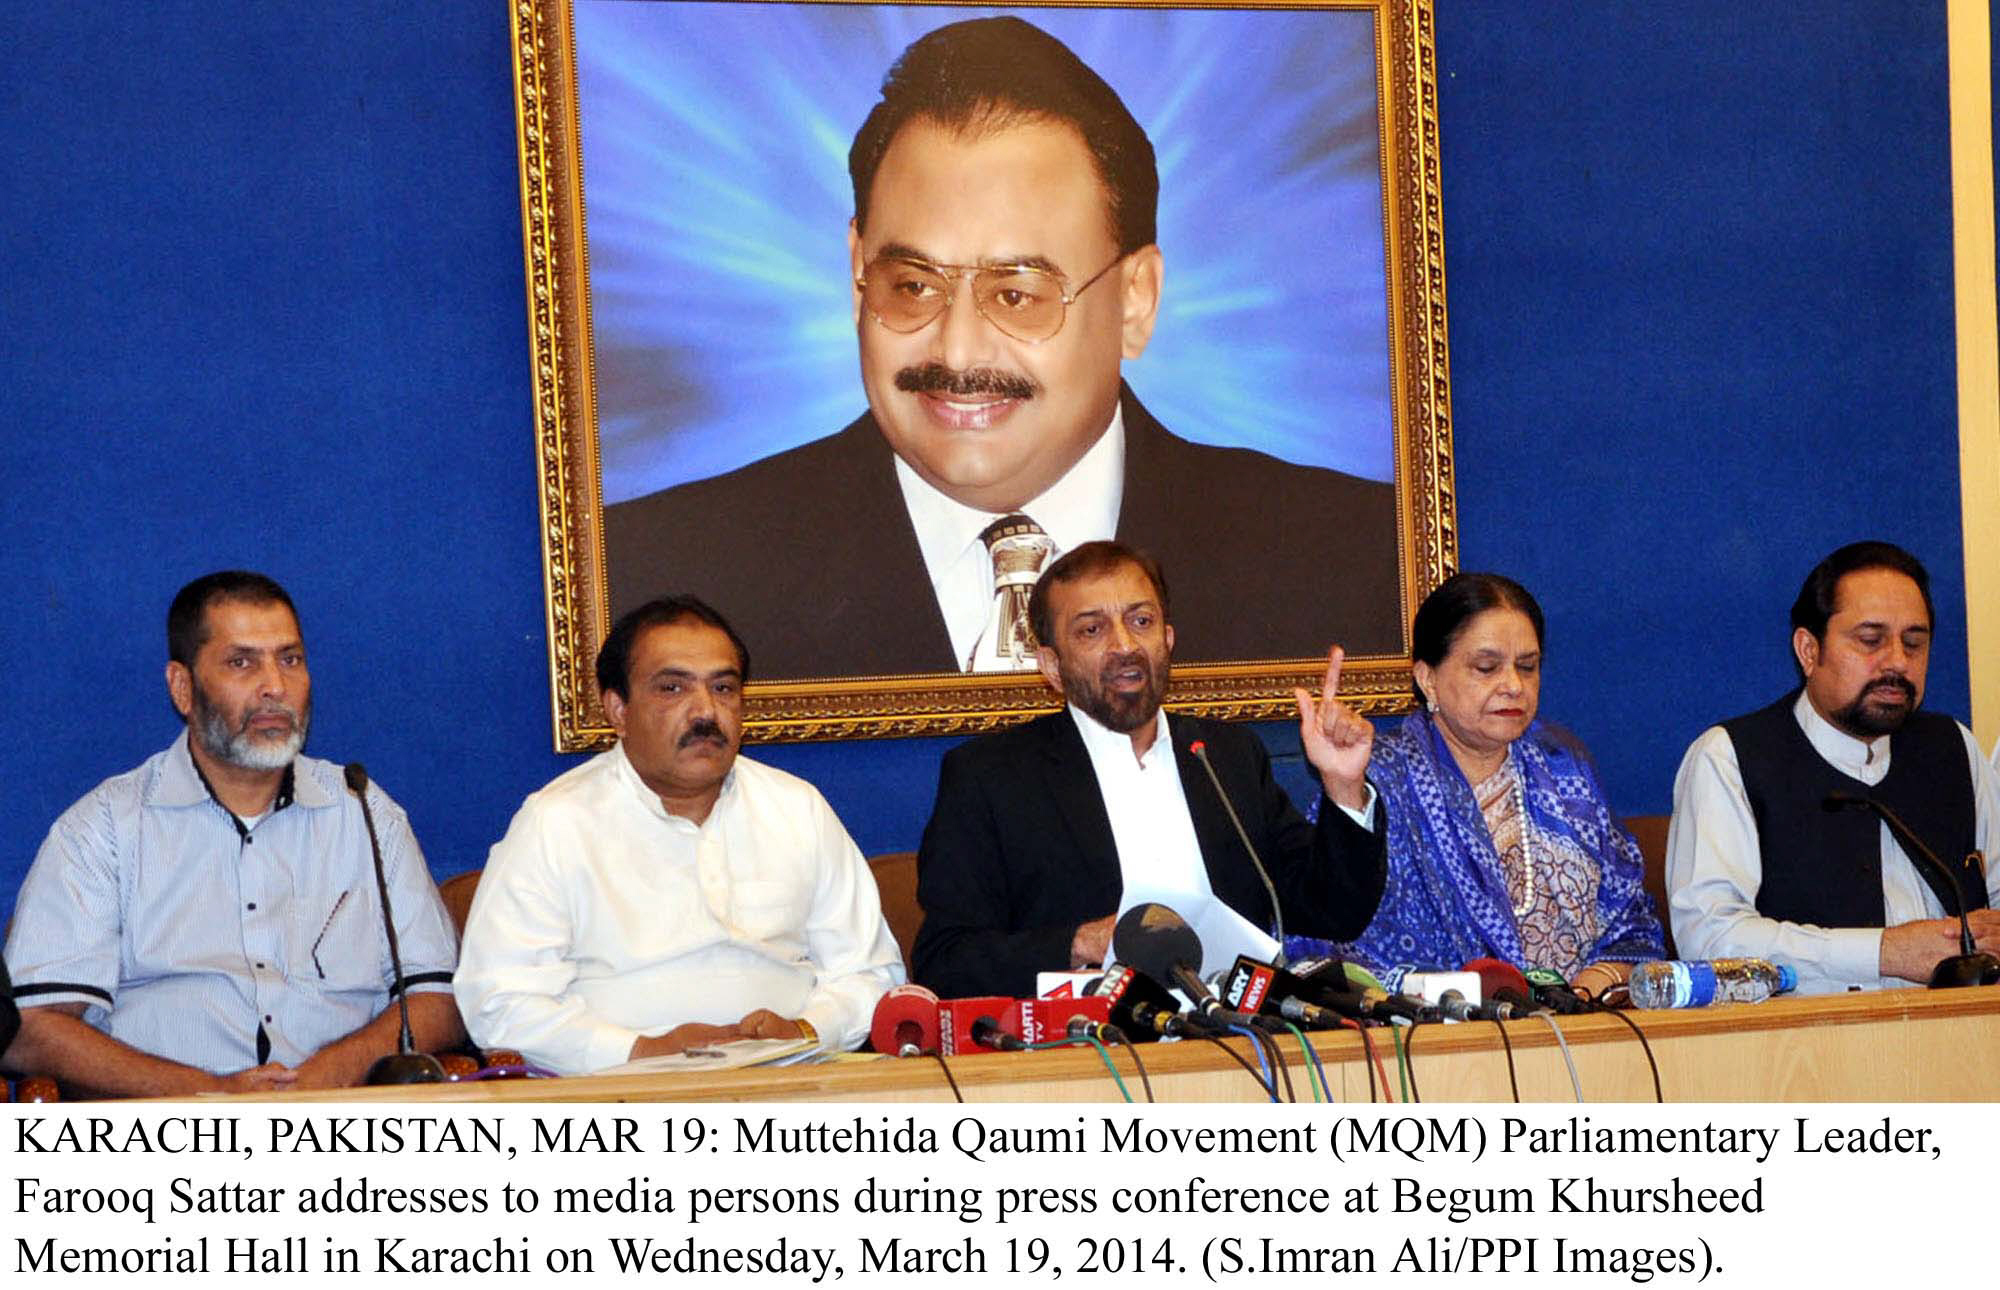 mqm leader farooq sattar addressing a press conference at begum khursheed memorial hall in karachi on wednesday photo ppi